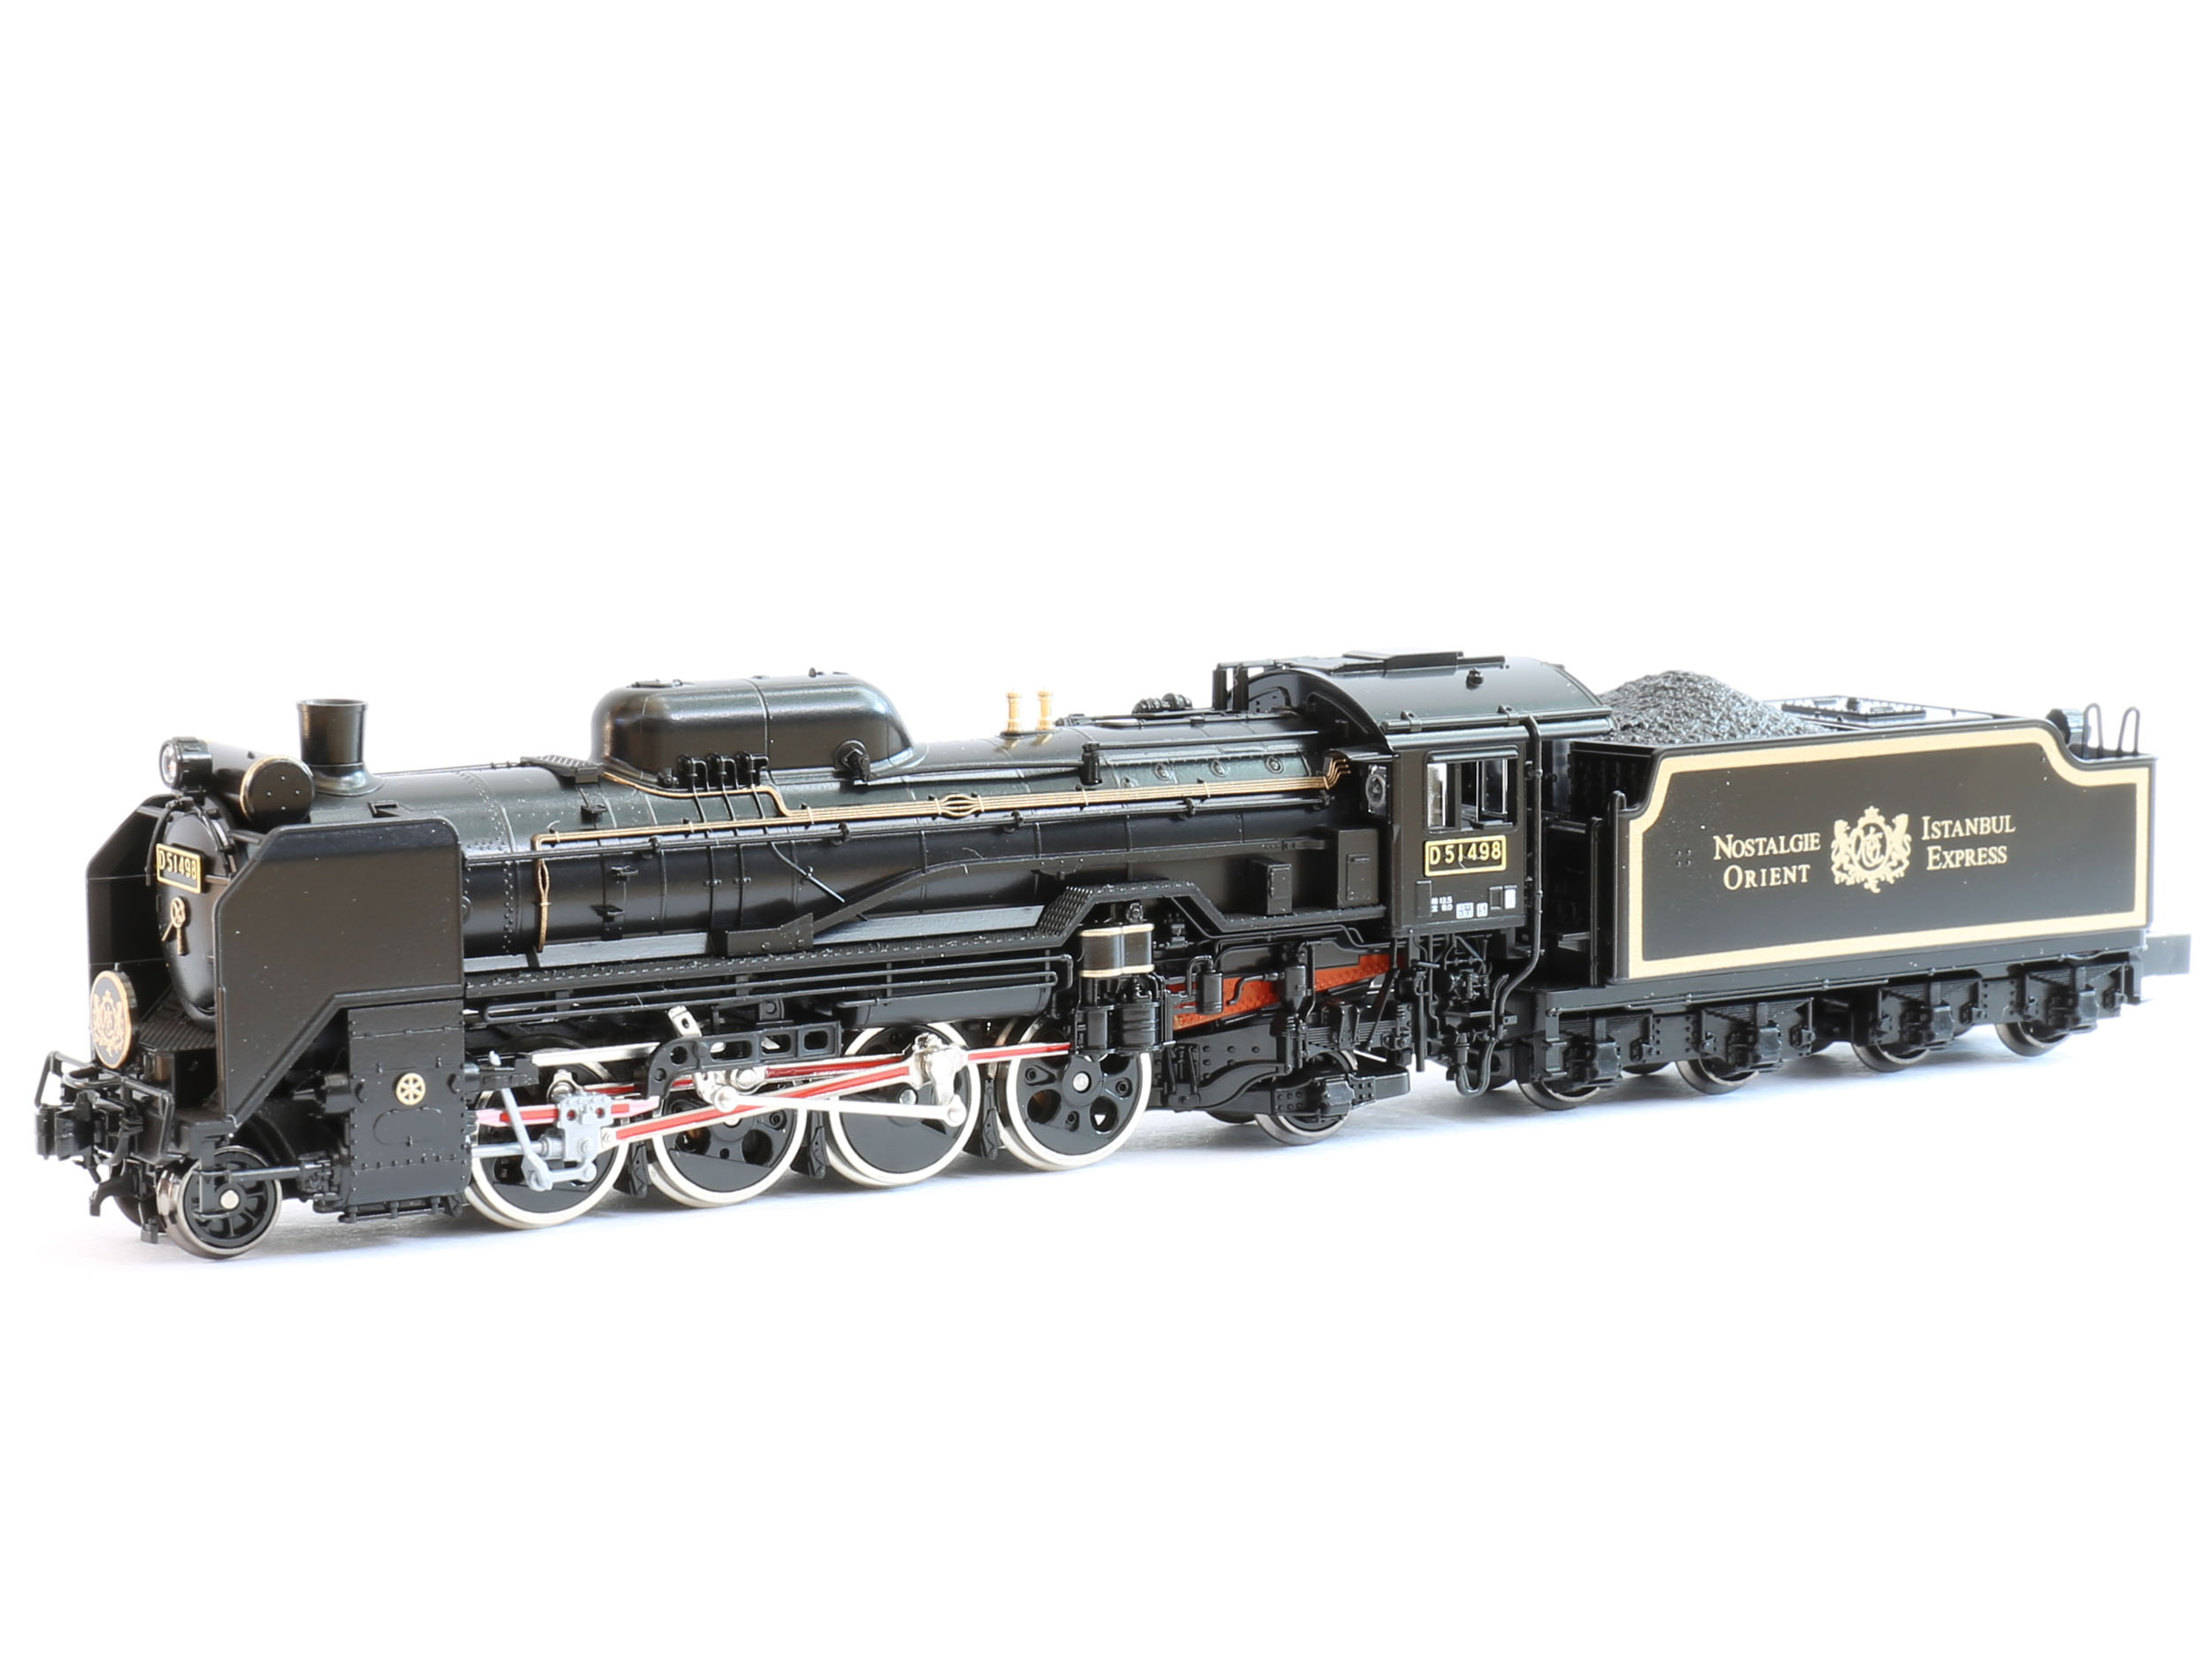 Kato 2016-2: Steam locomotive D51-498 CIWL and JNR Orient Express